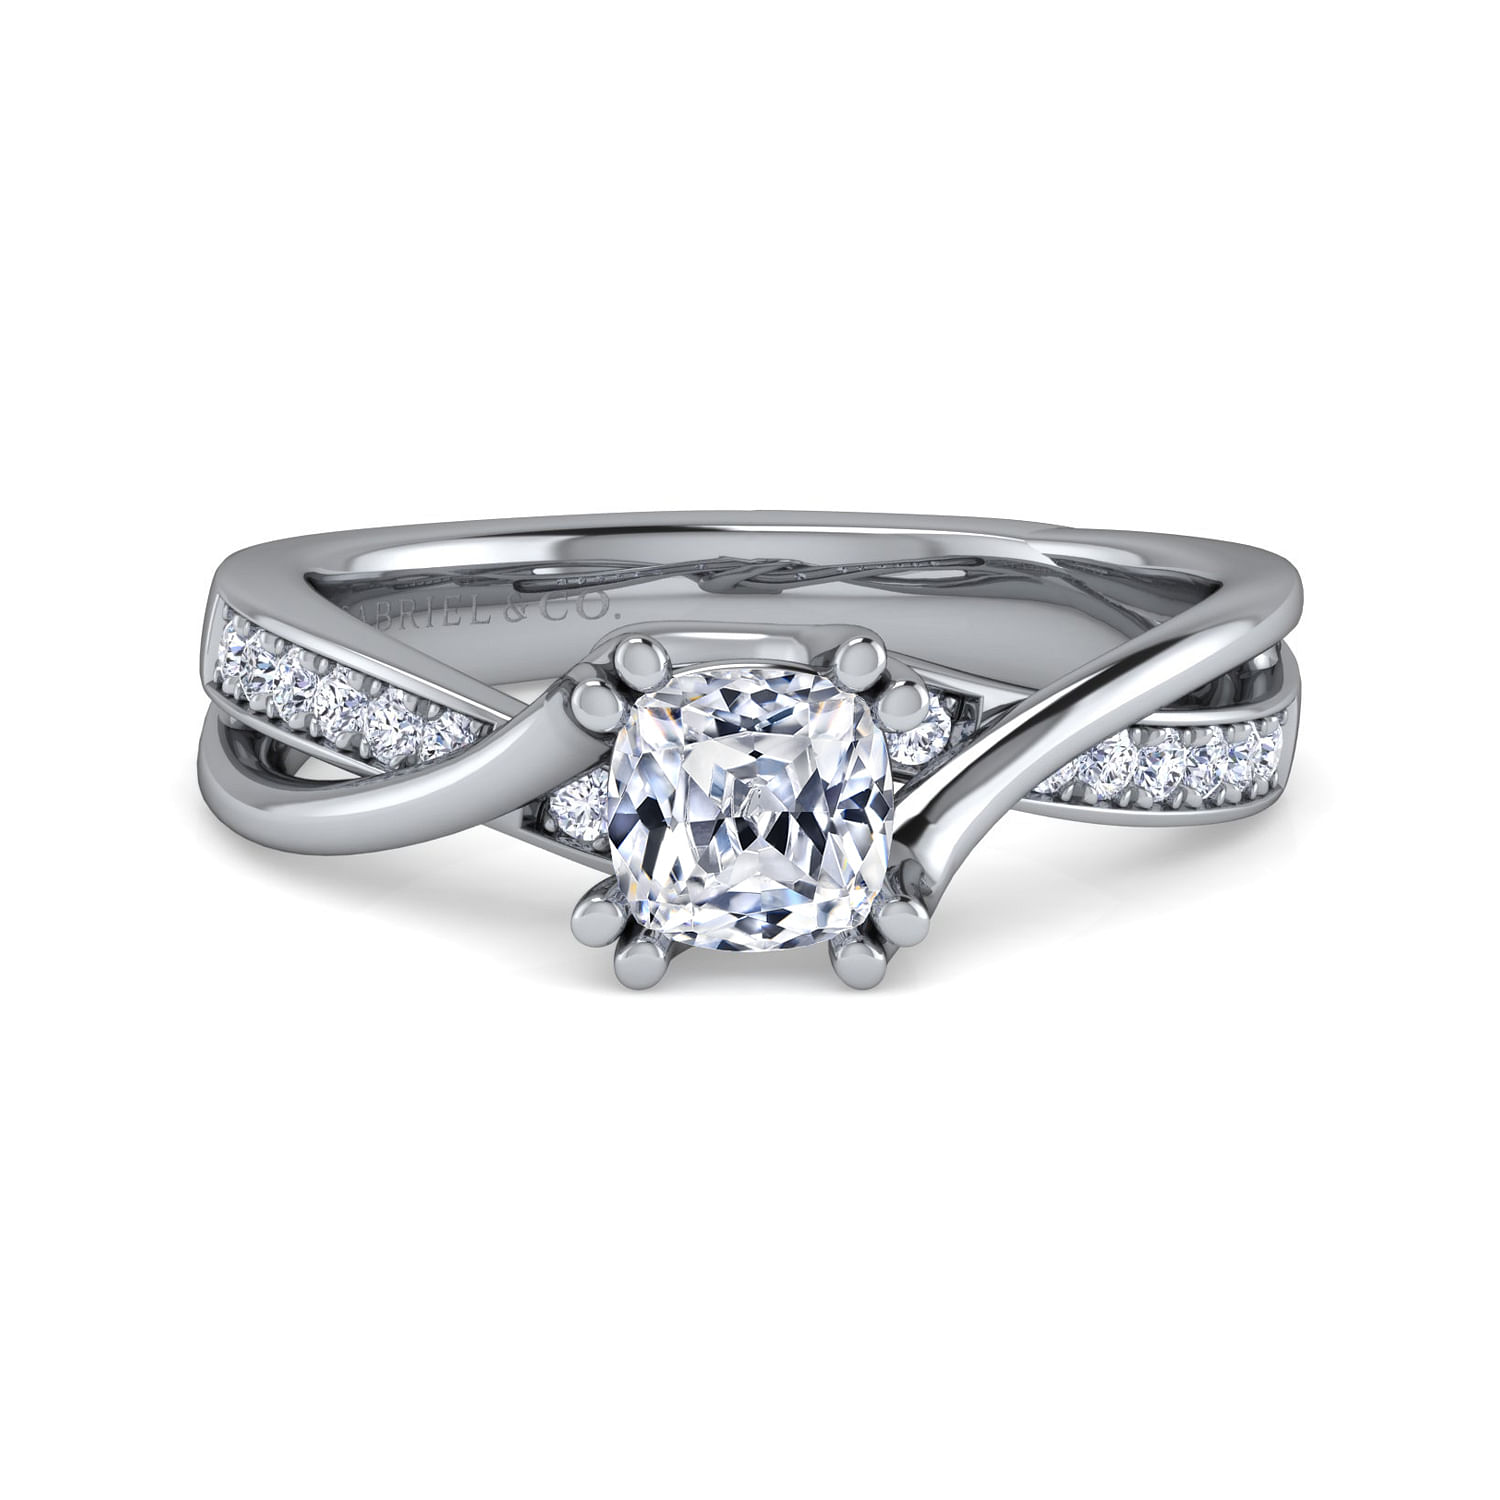 Aleesa - 14K White Gold Twisted Cushion Cut Diamond Engagement Ring